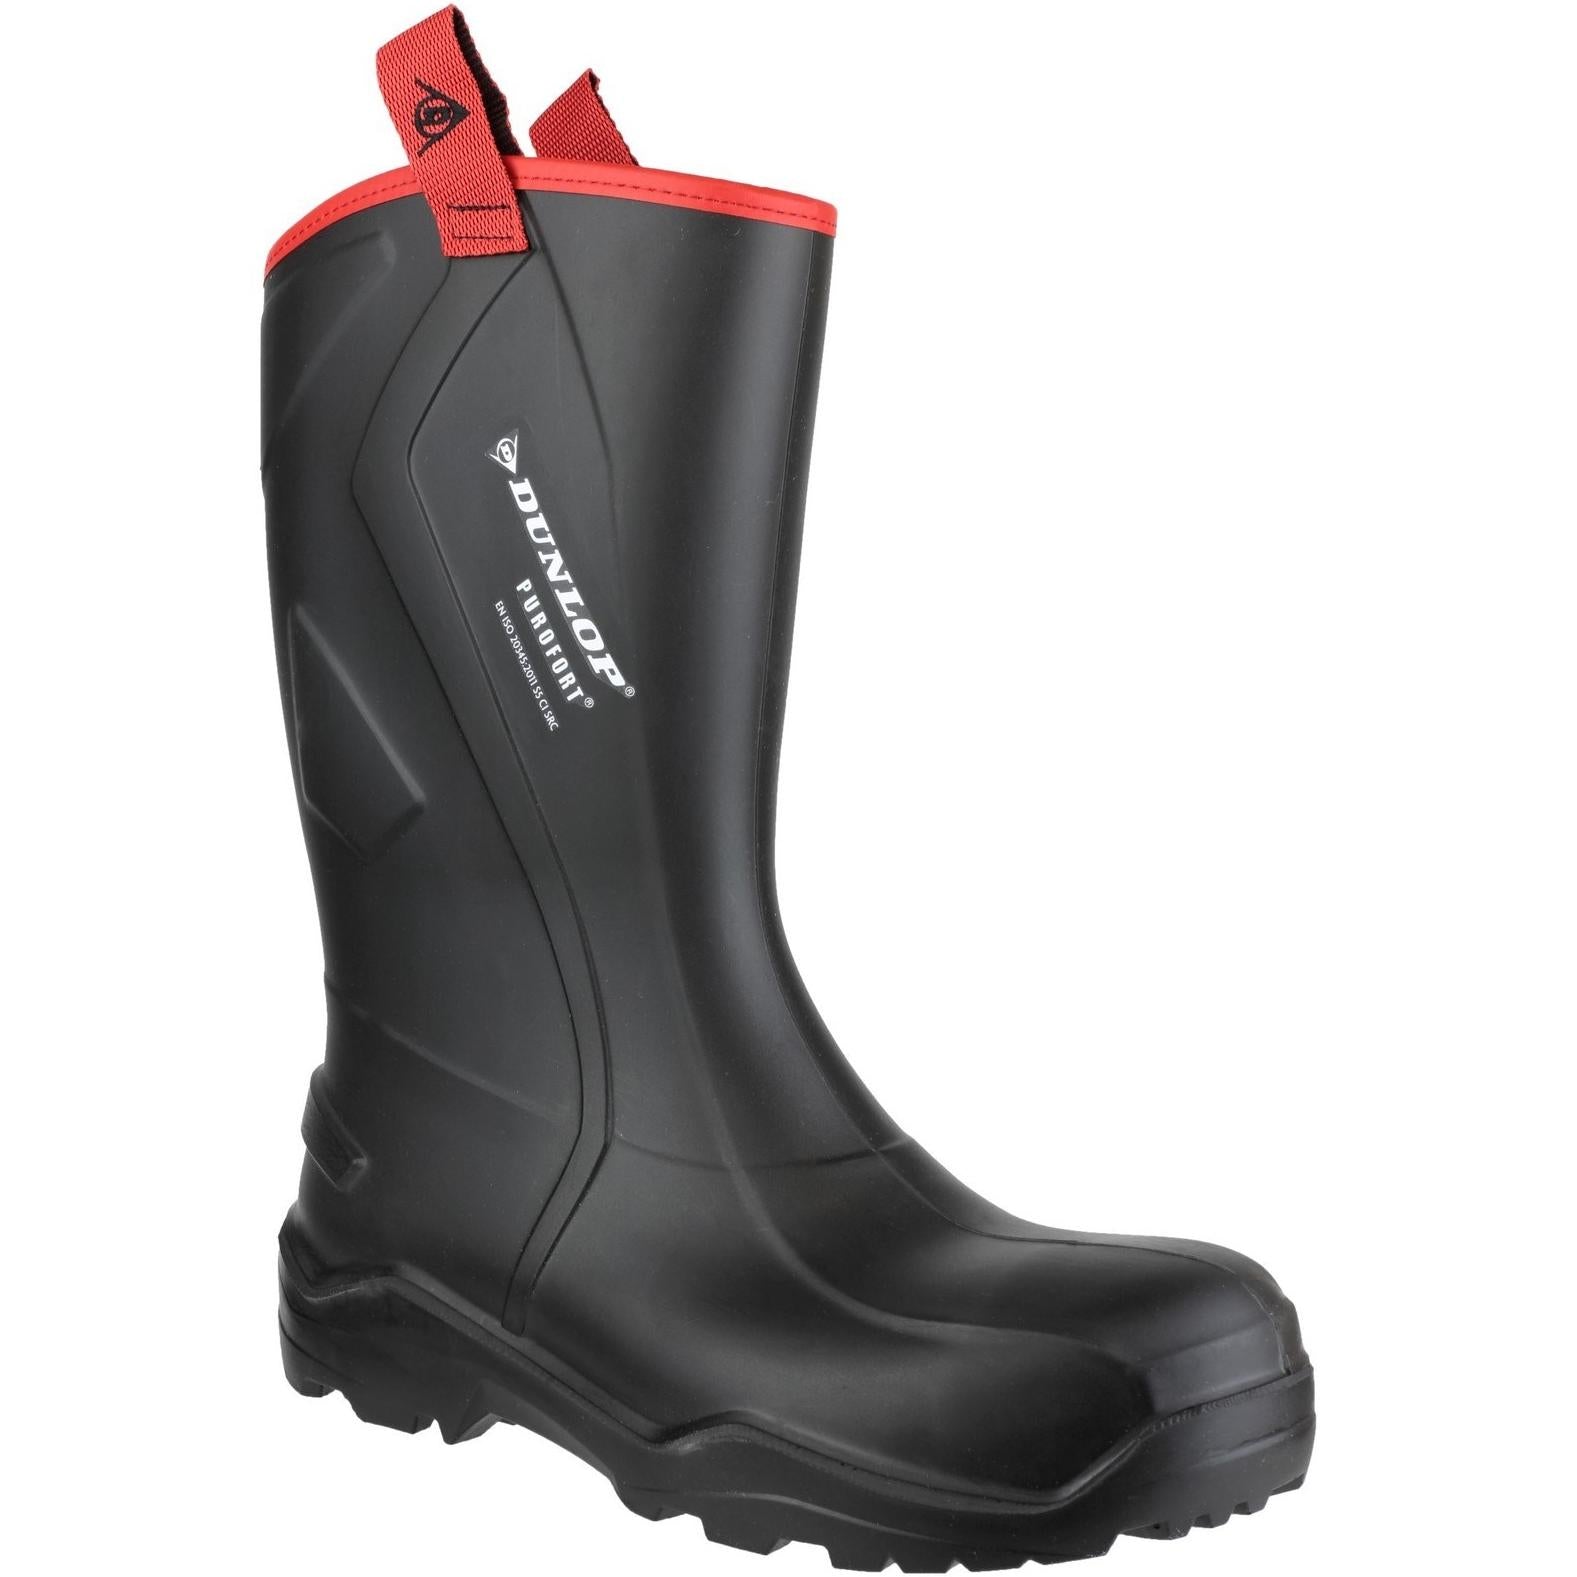 Dunlop Purofort+ Rugged Full Safety Wellingtons Boots